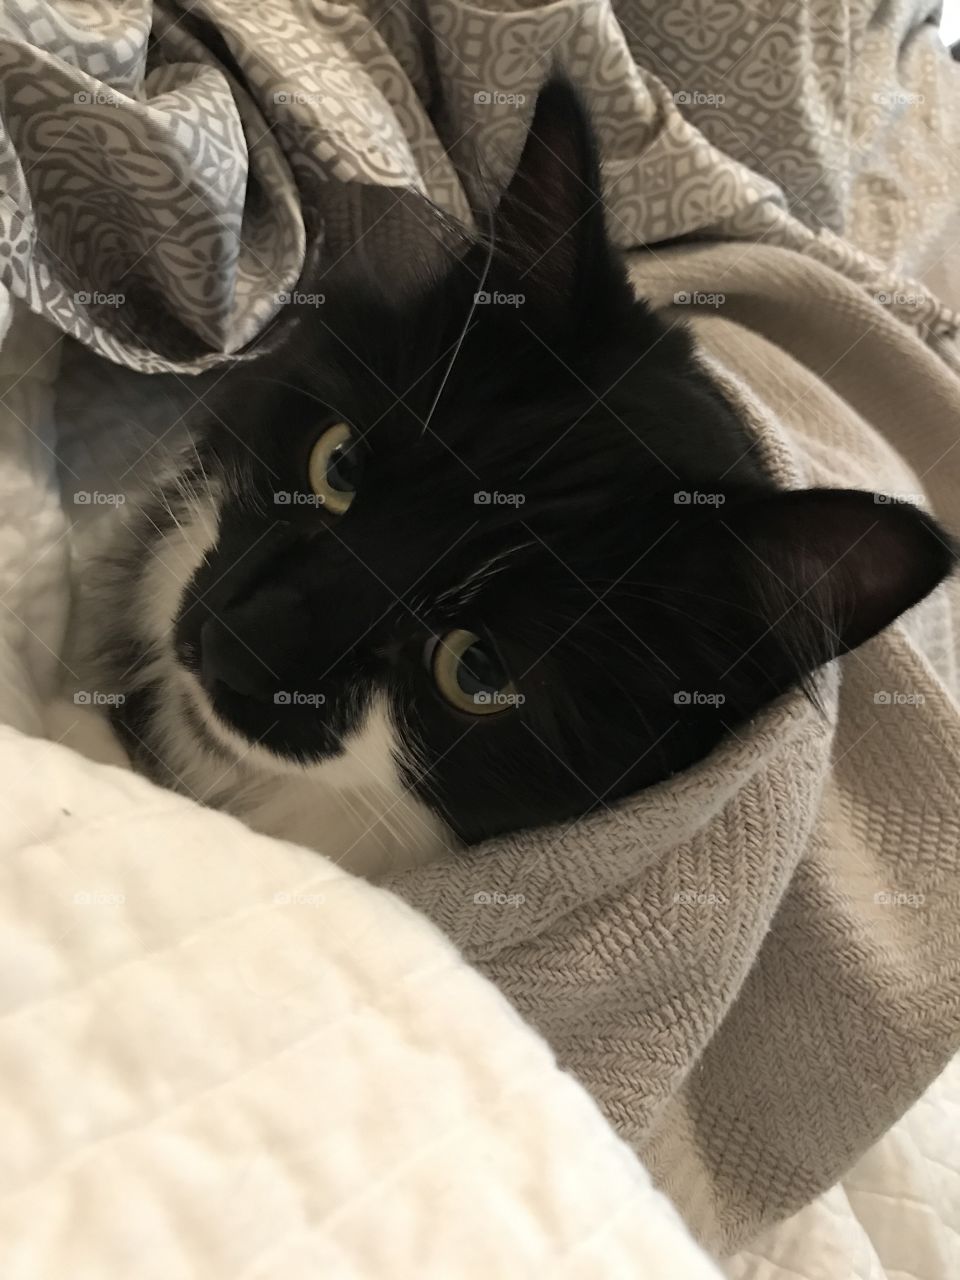 Grumpy cat cuddled up in a blanket 